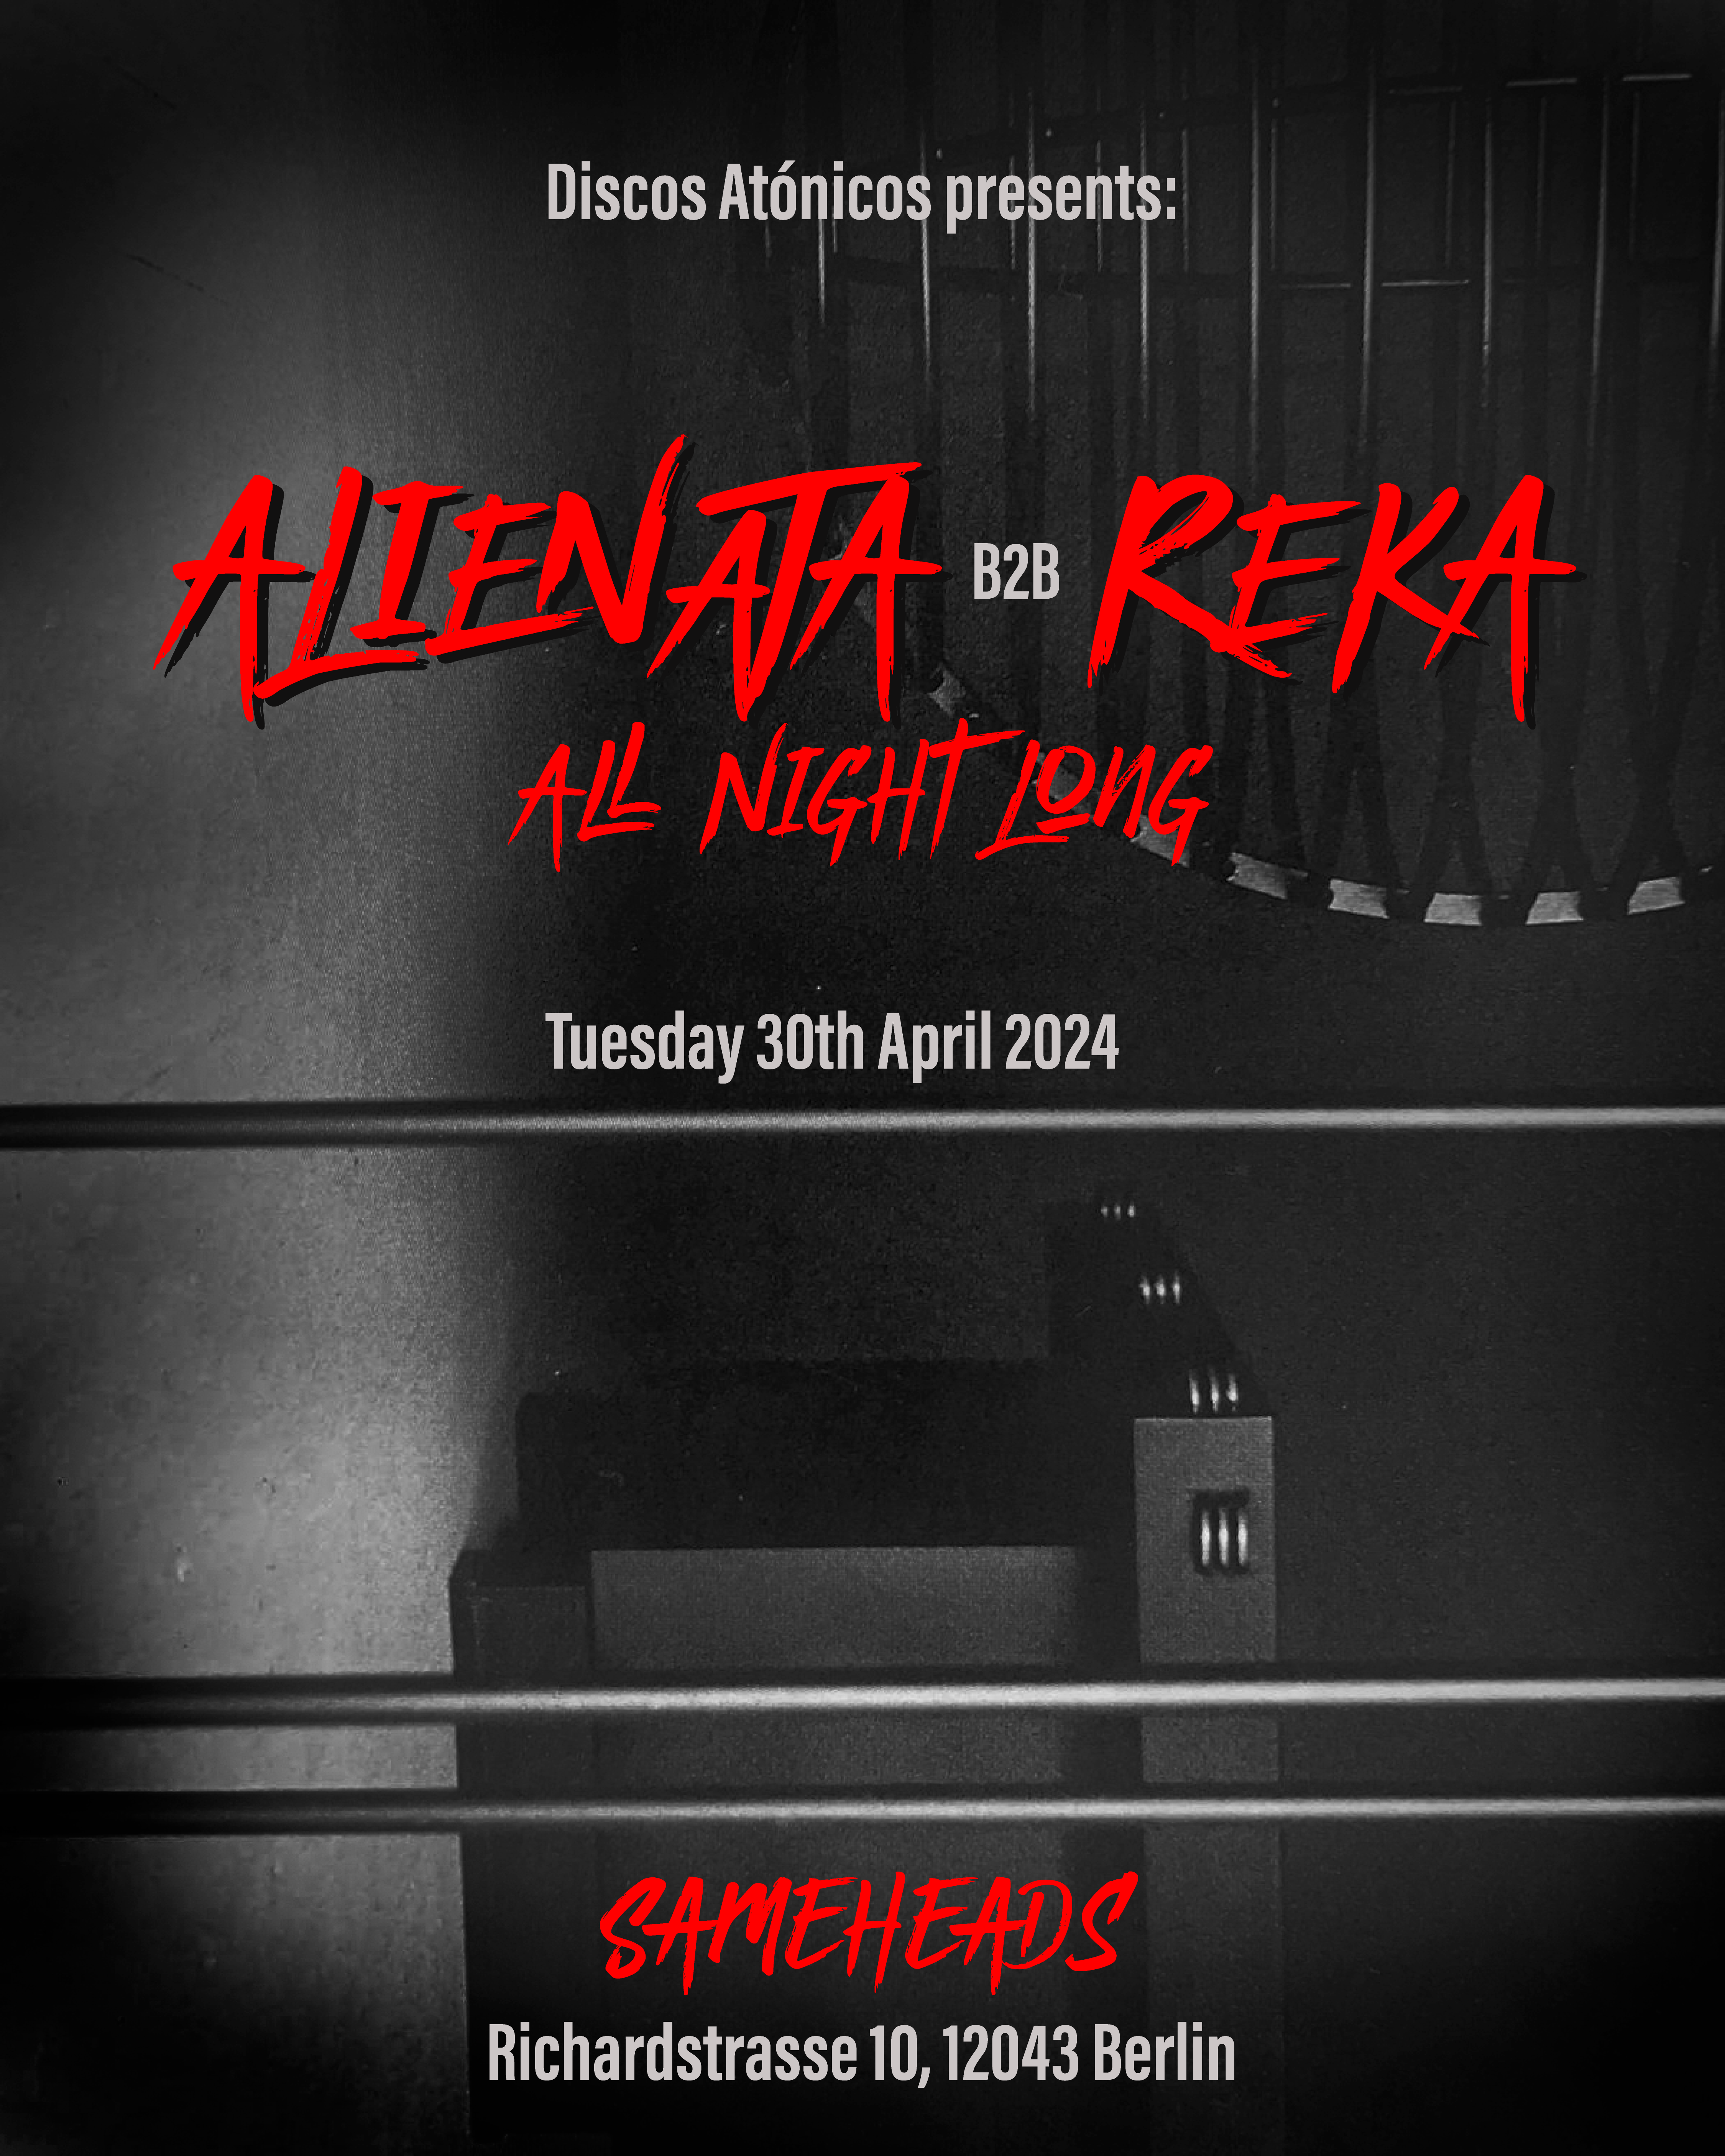 Discos Atónicos presents Alienata b2b Reka all night long - Página frontal